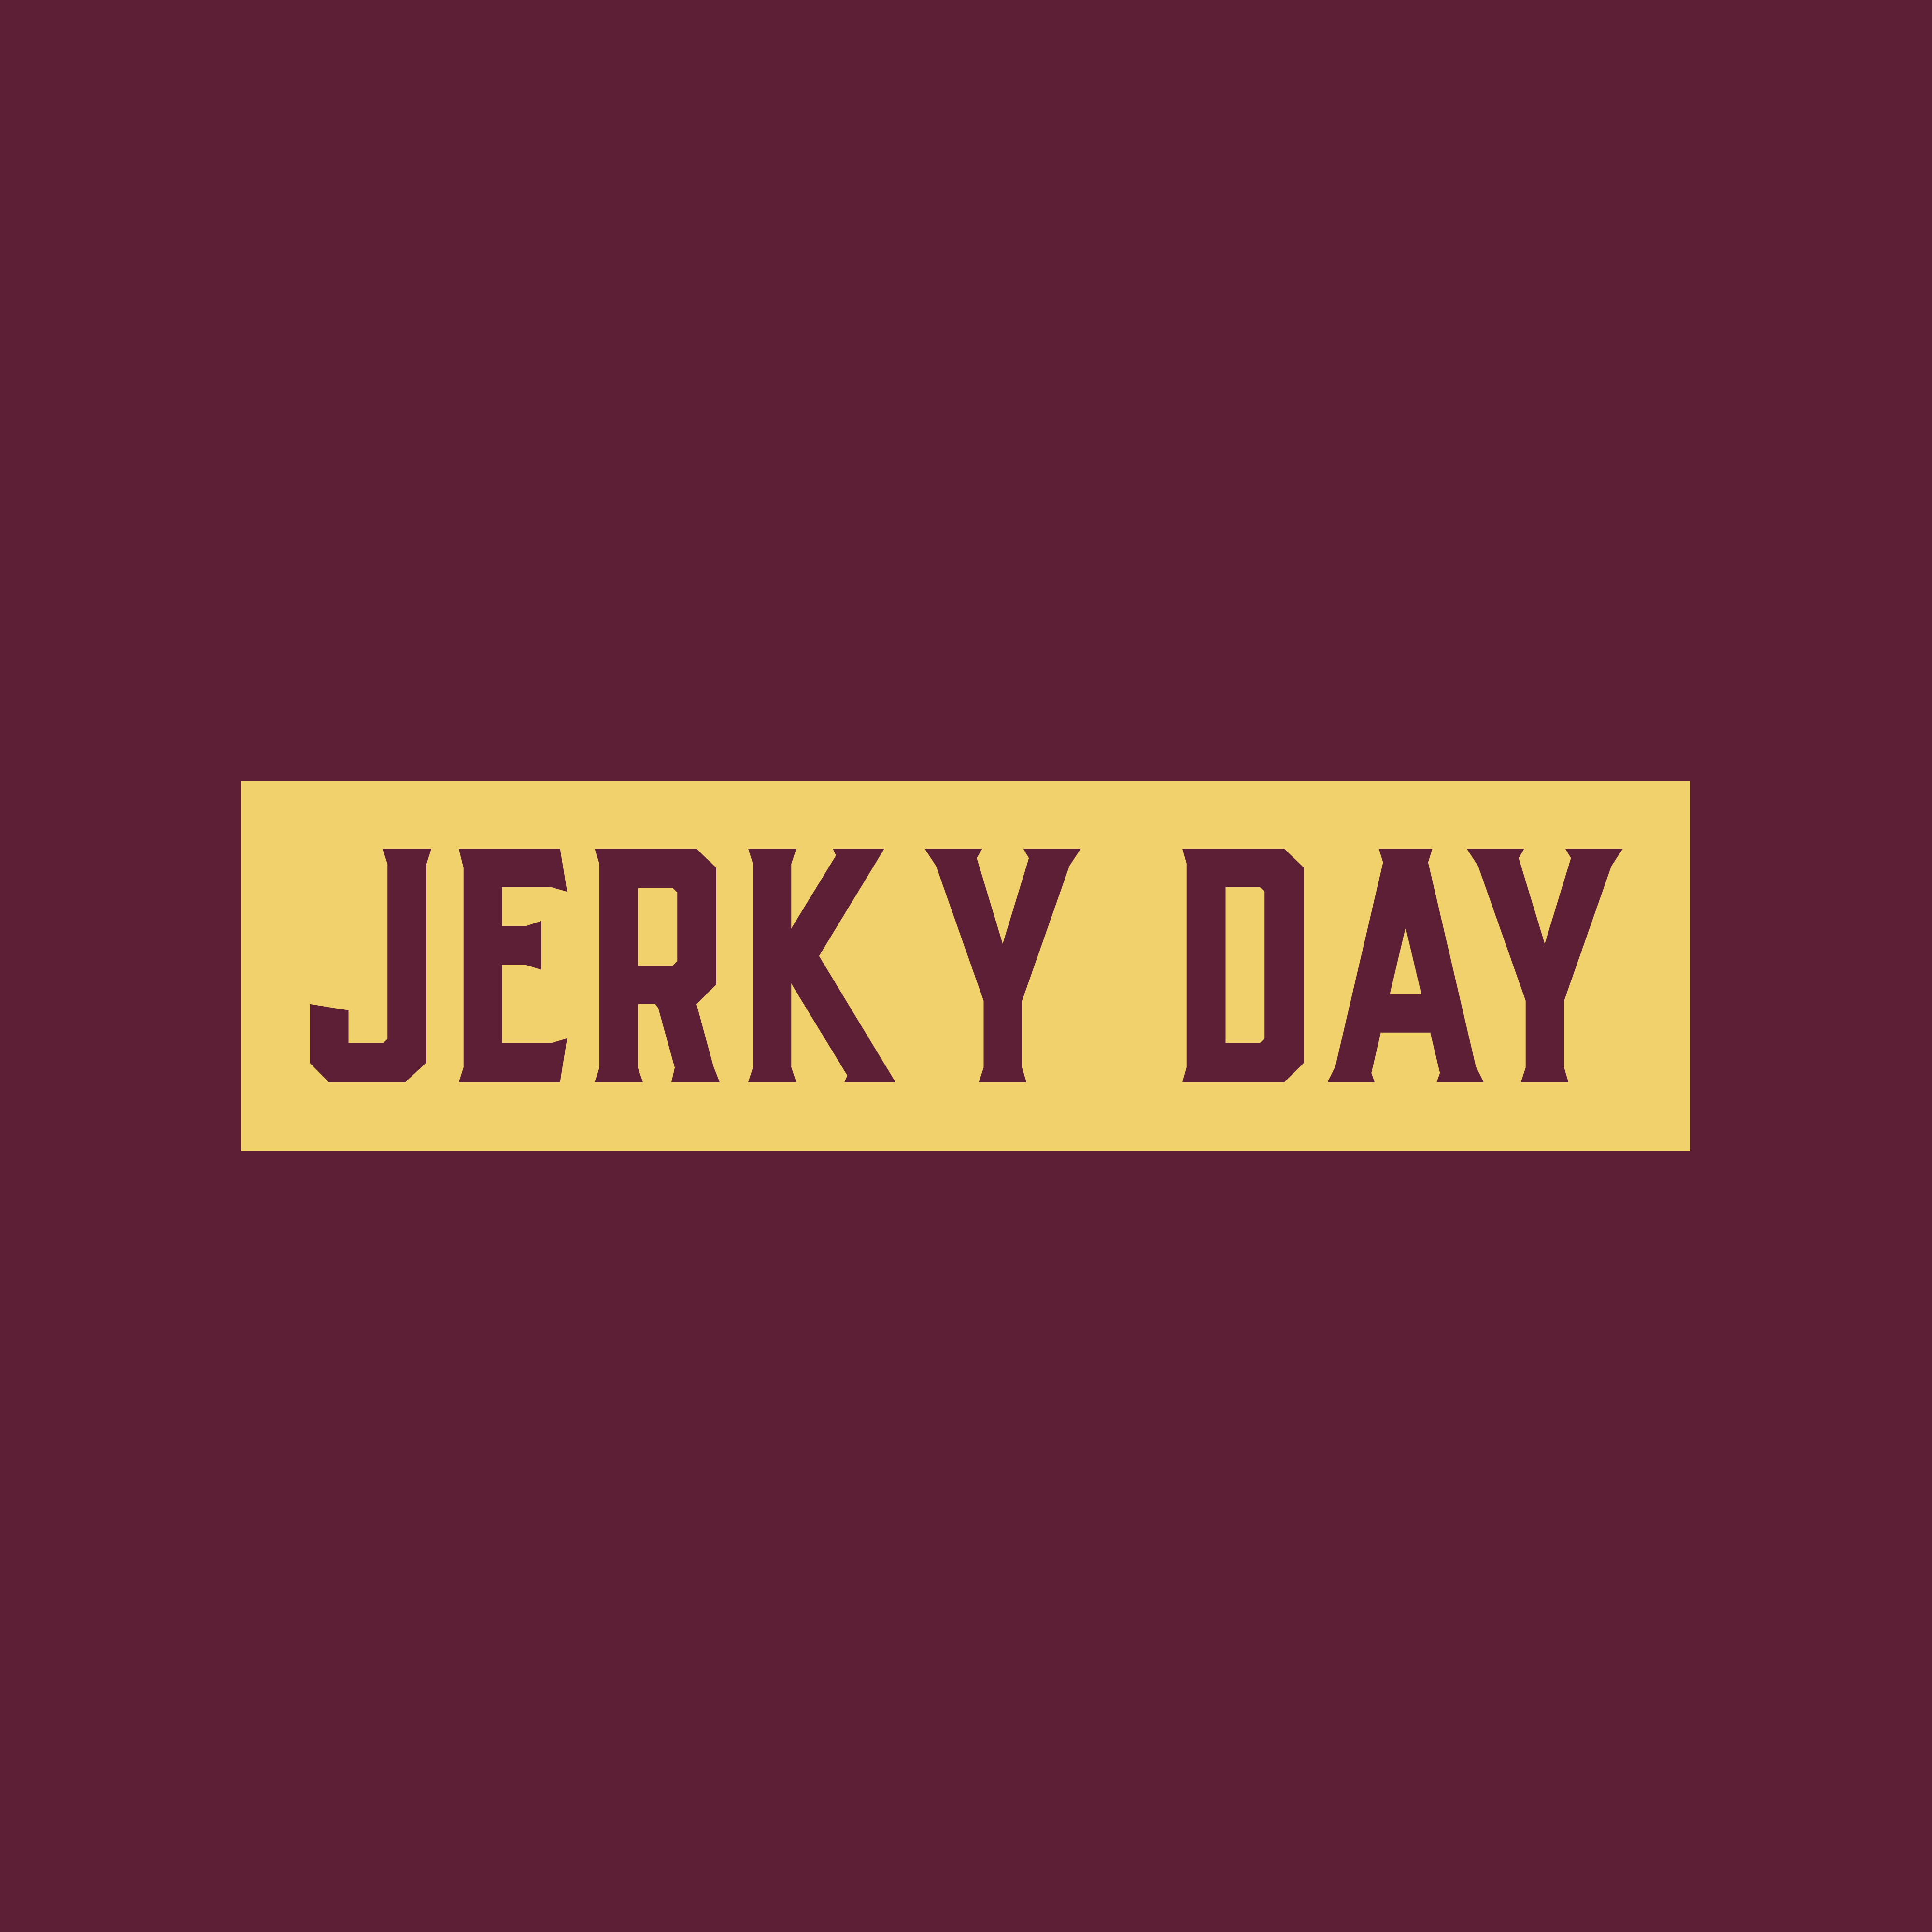 Jerky Day